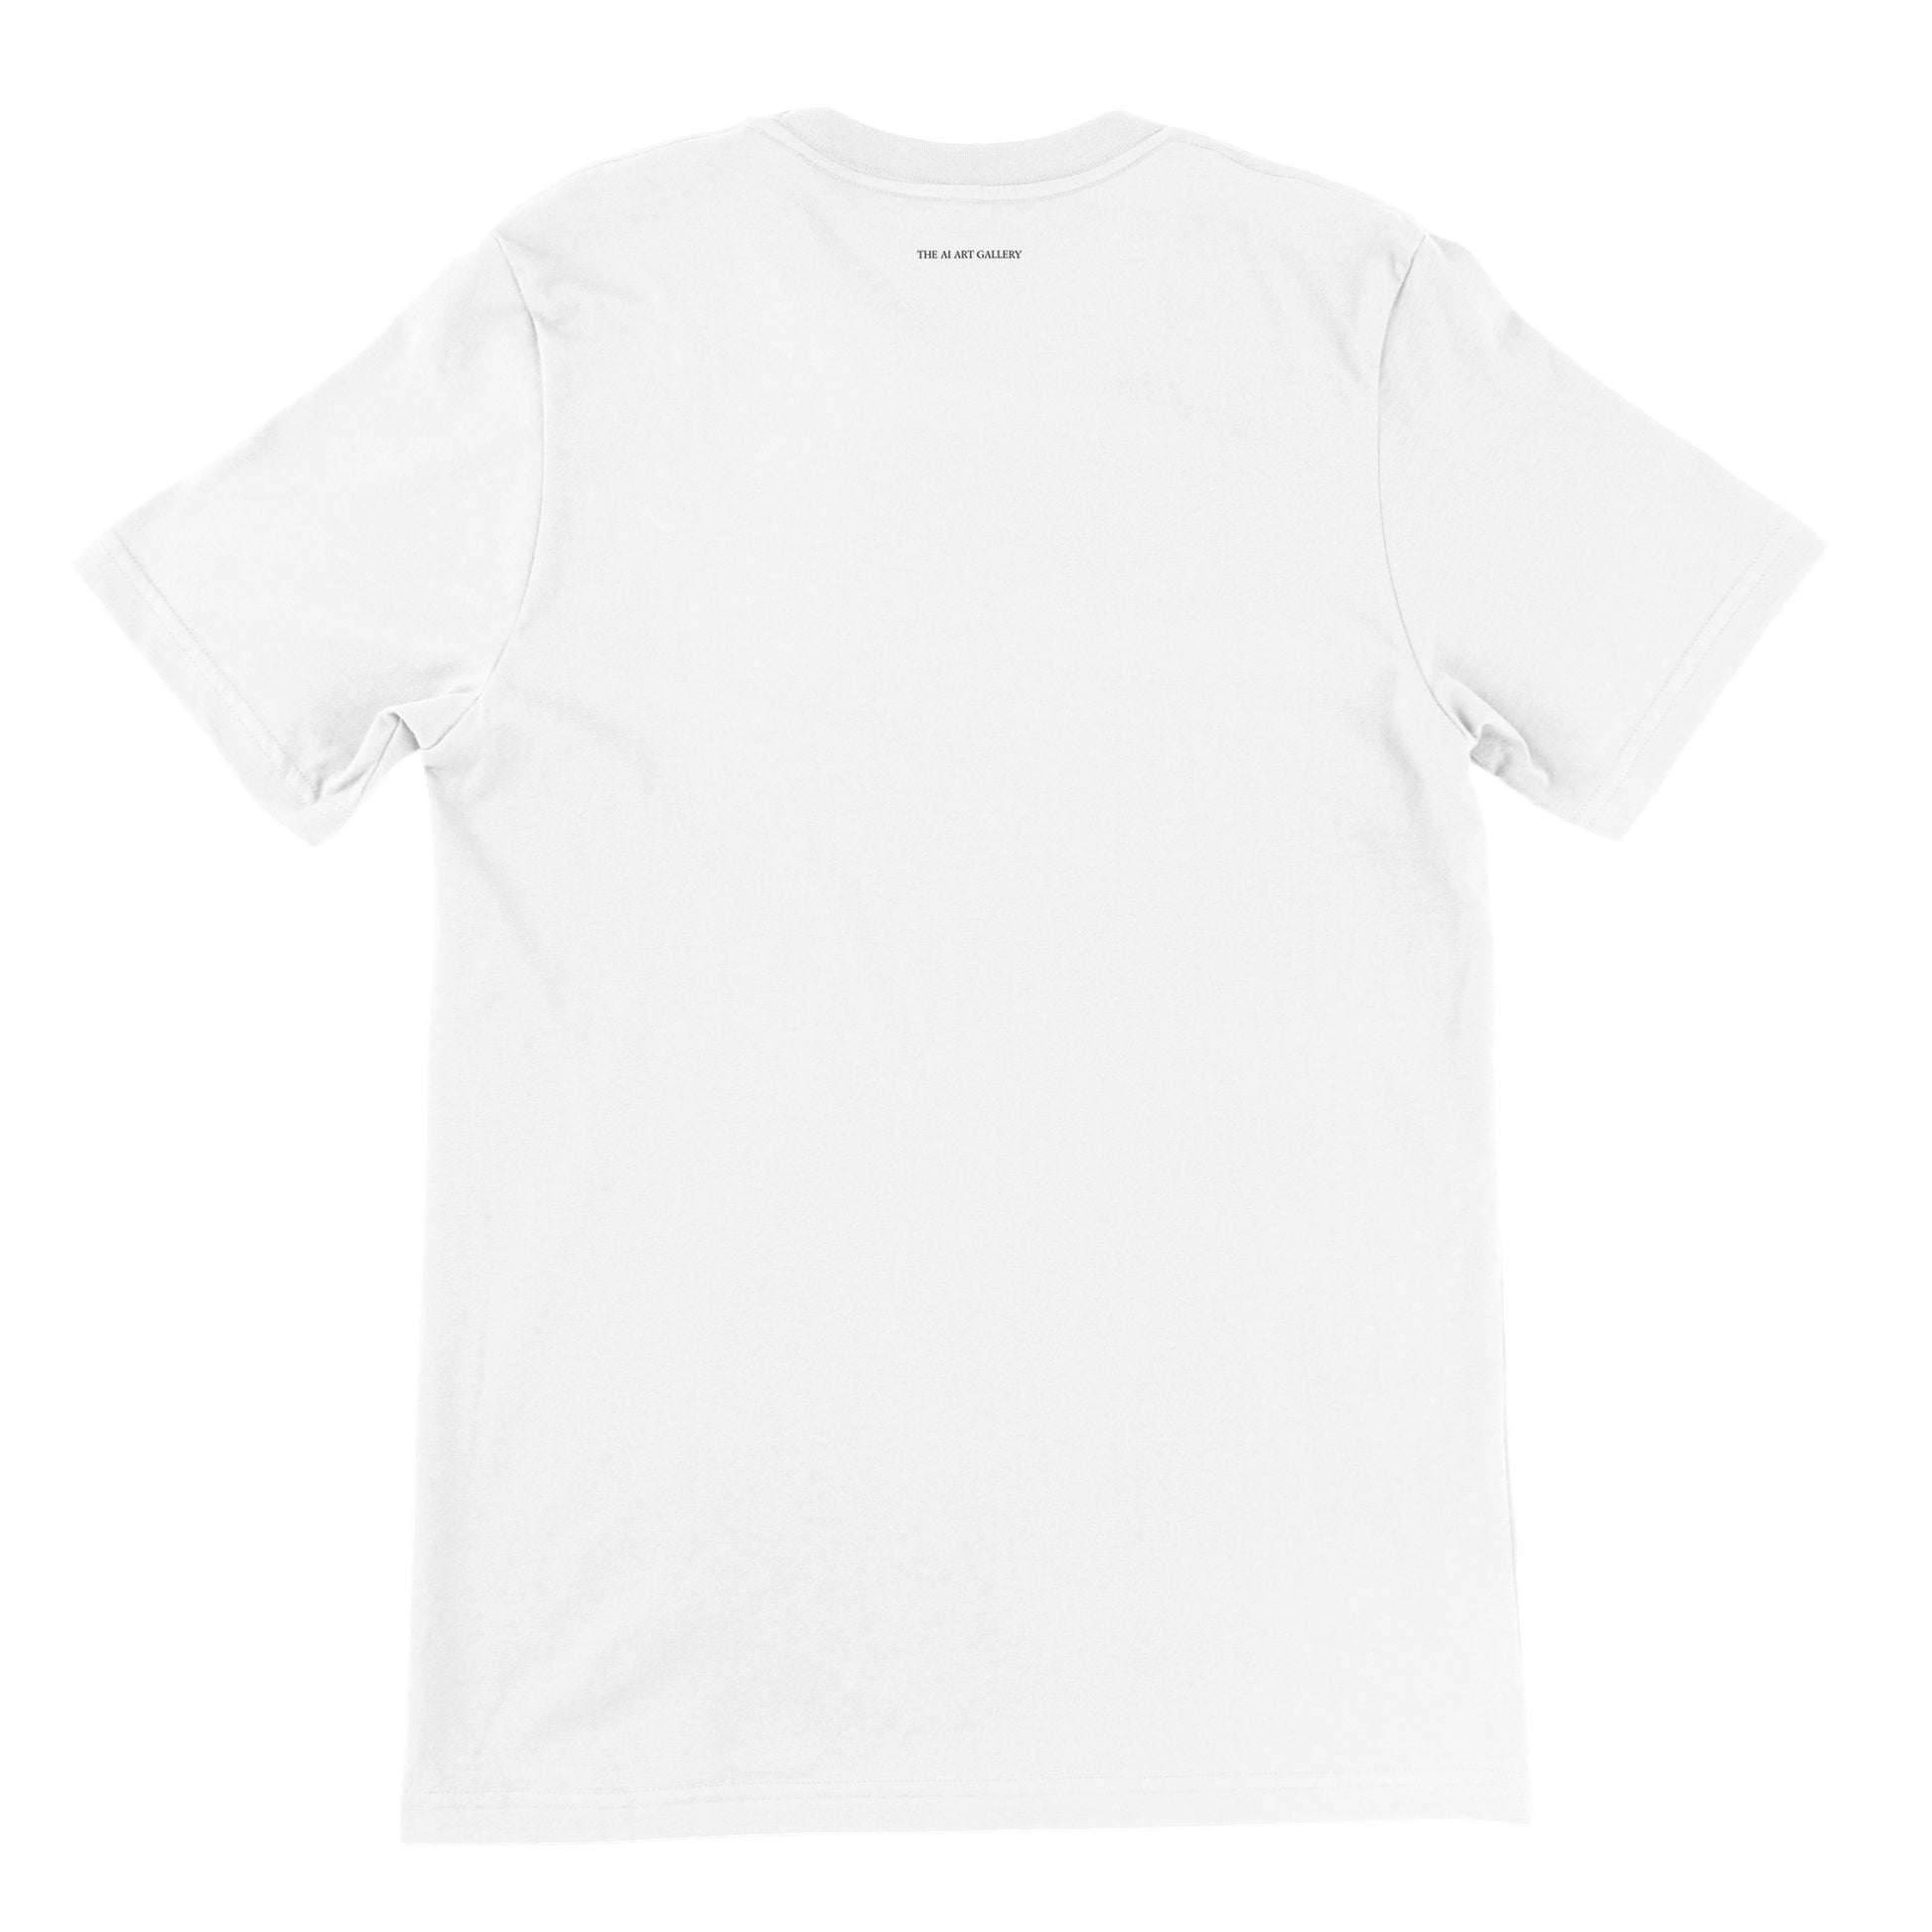 desiderium / SS23 / T-shirt / white – THE AI ART GALLERY